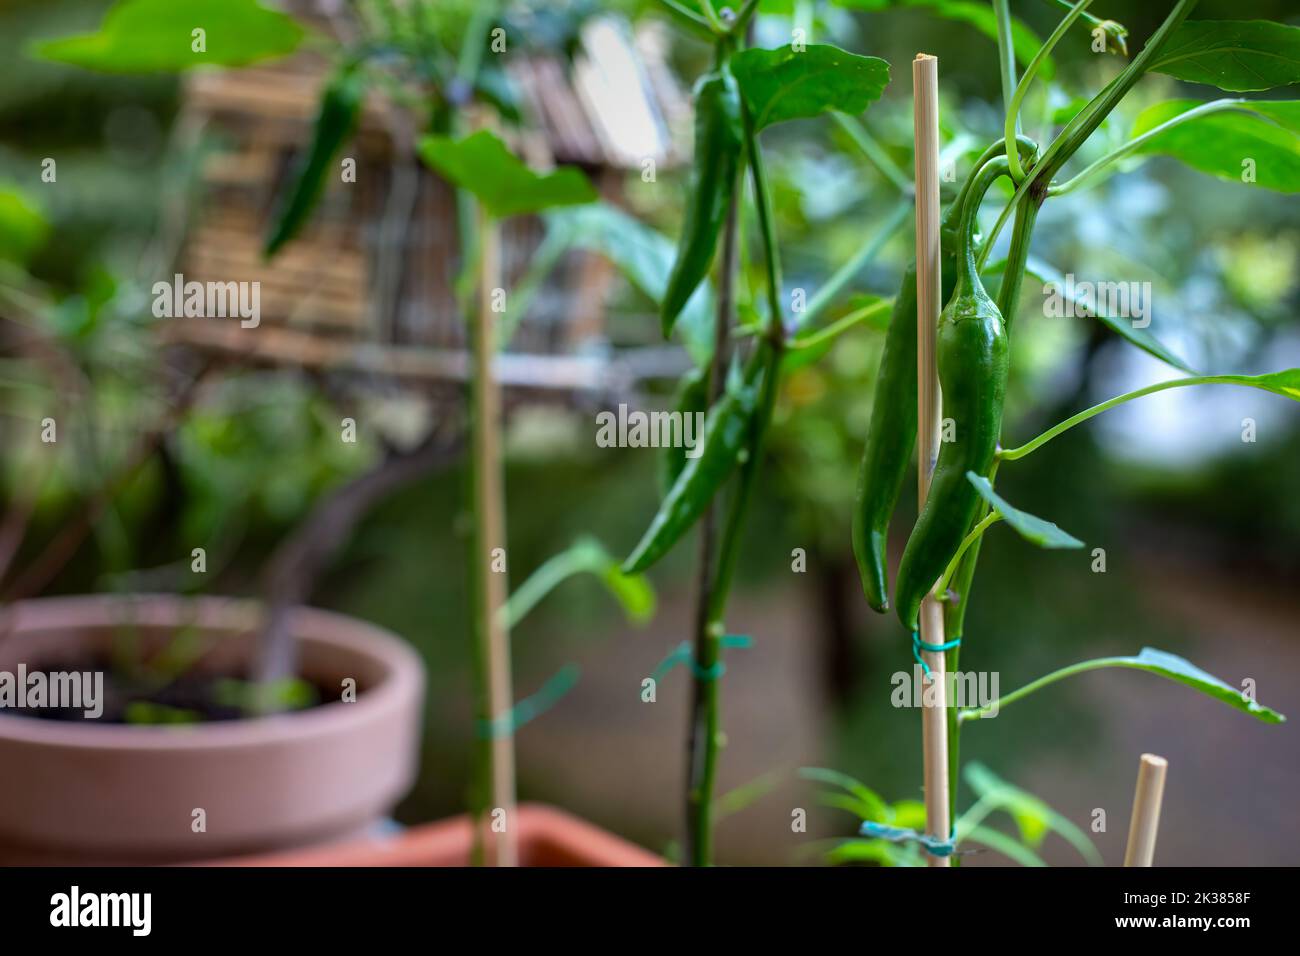 close-up of small chili plant on balcony Stock Photo